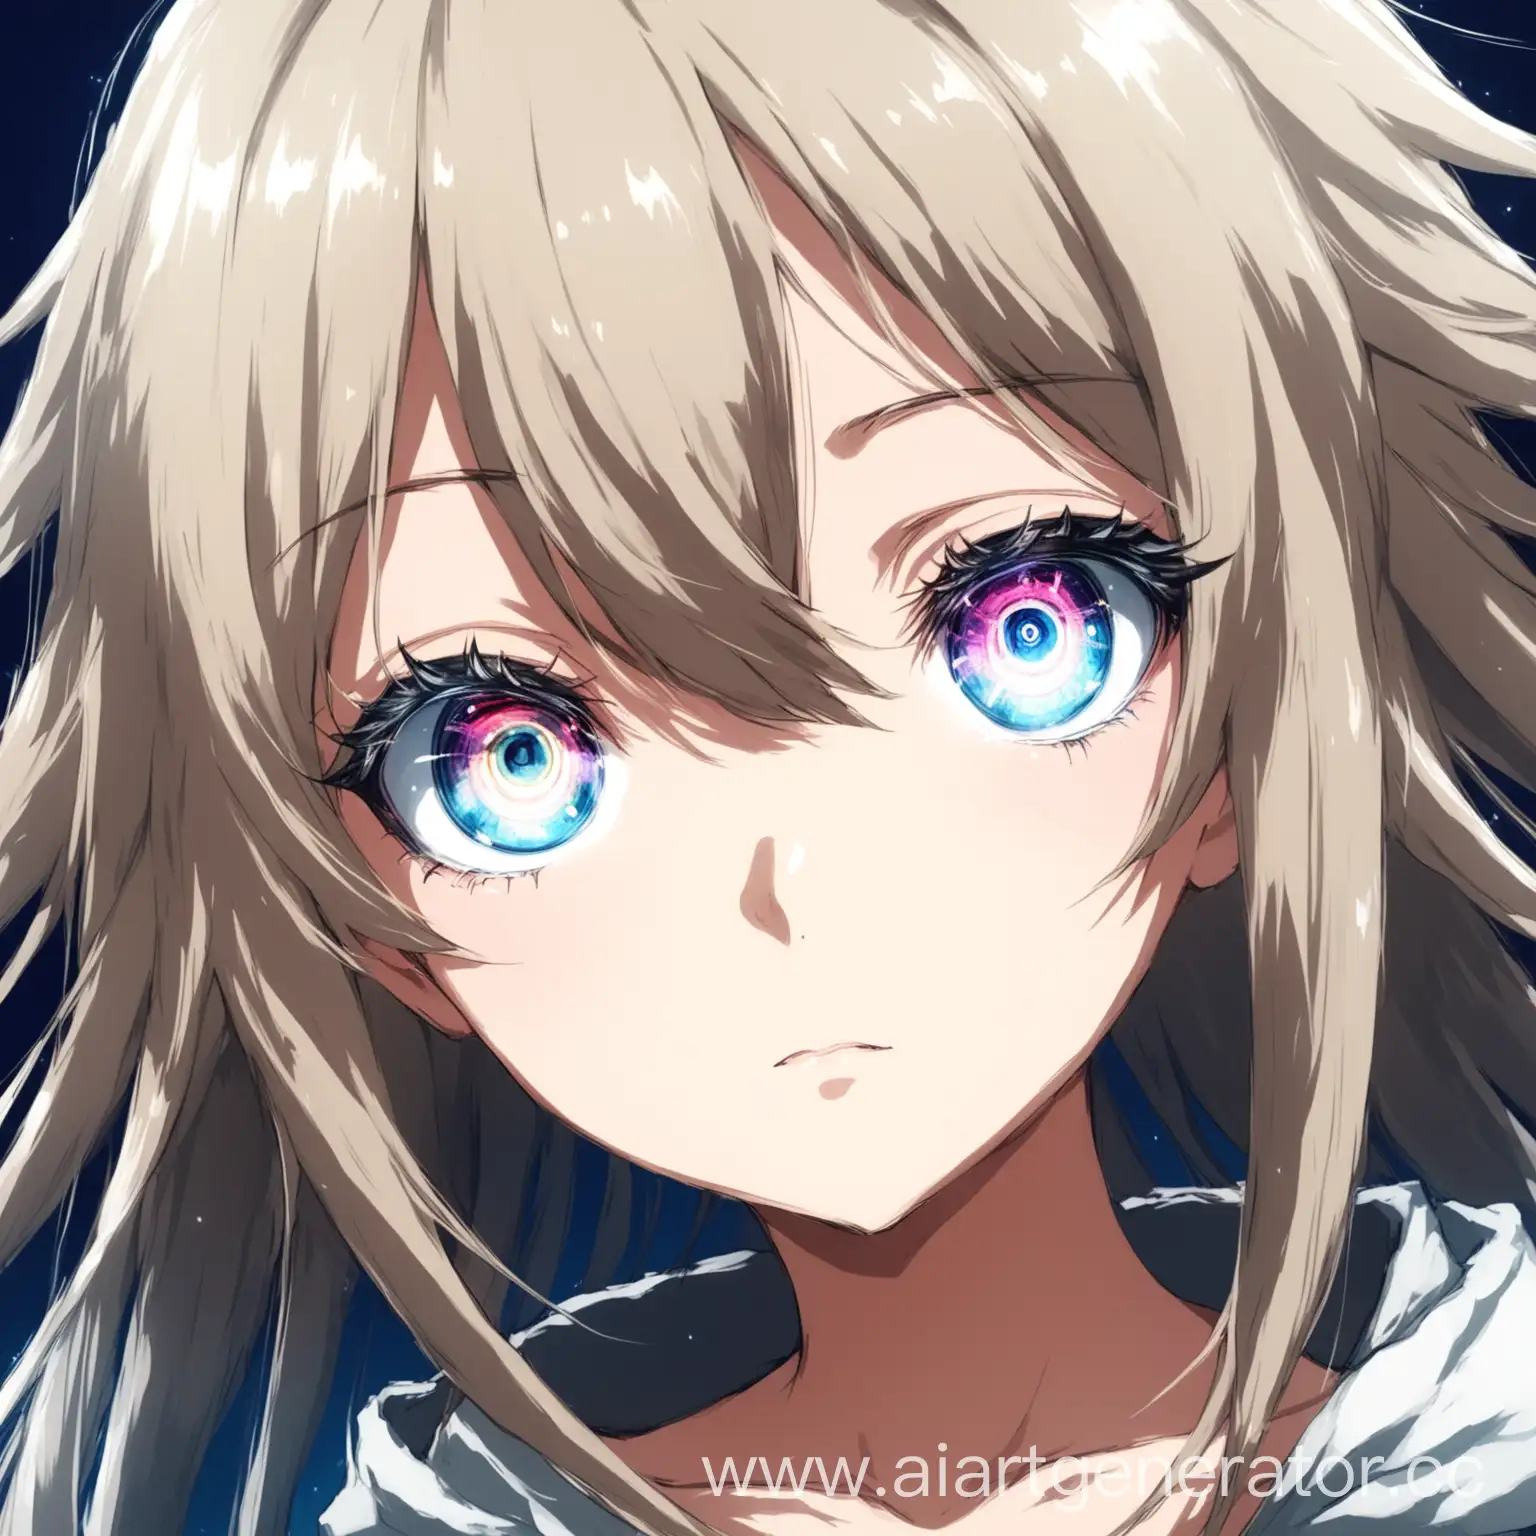 Enigmatic-Anime-Girl-with-Mesmerizing-Eyes